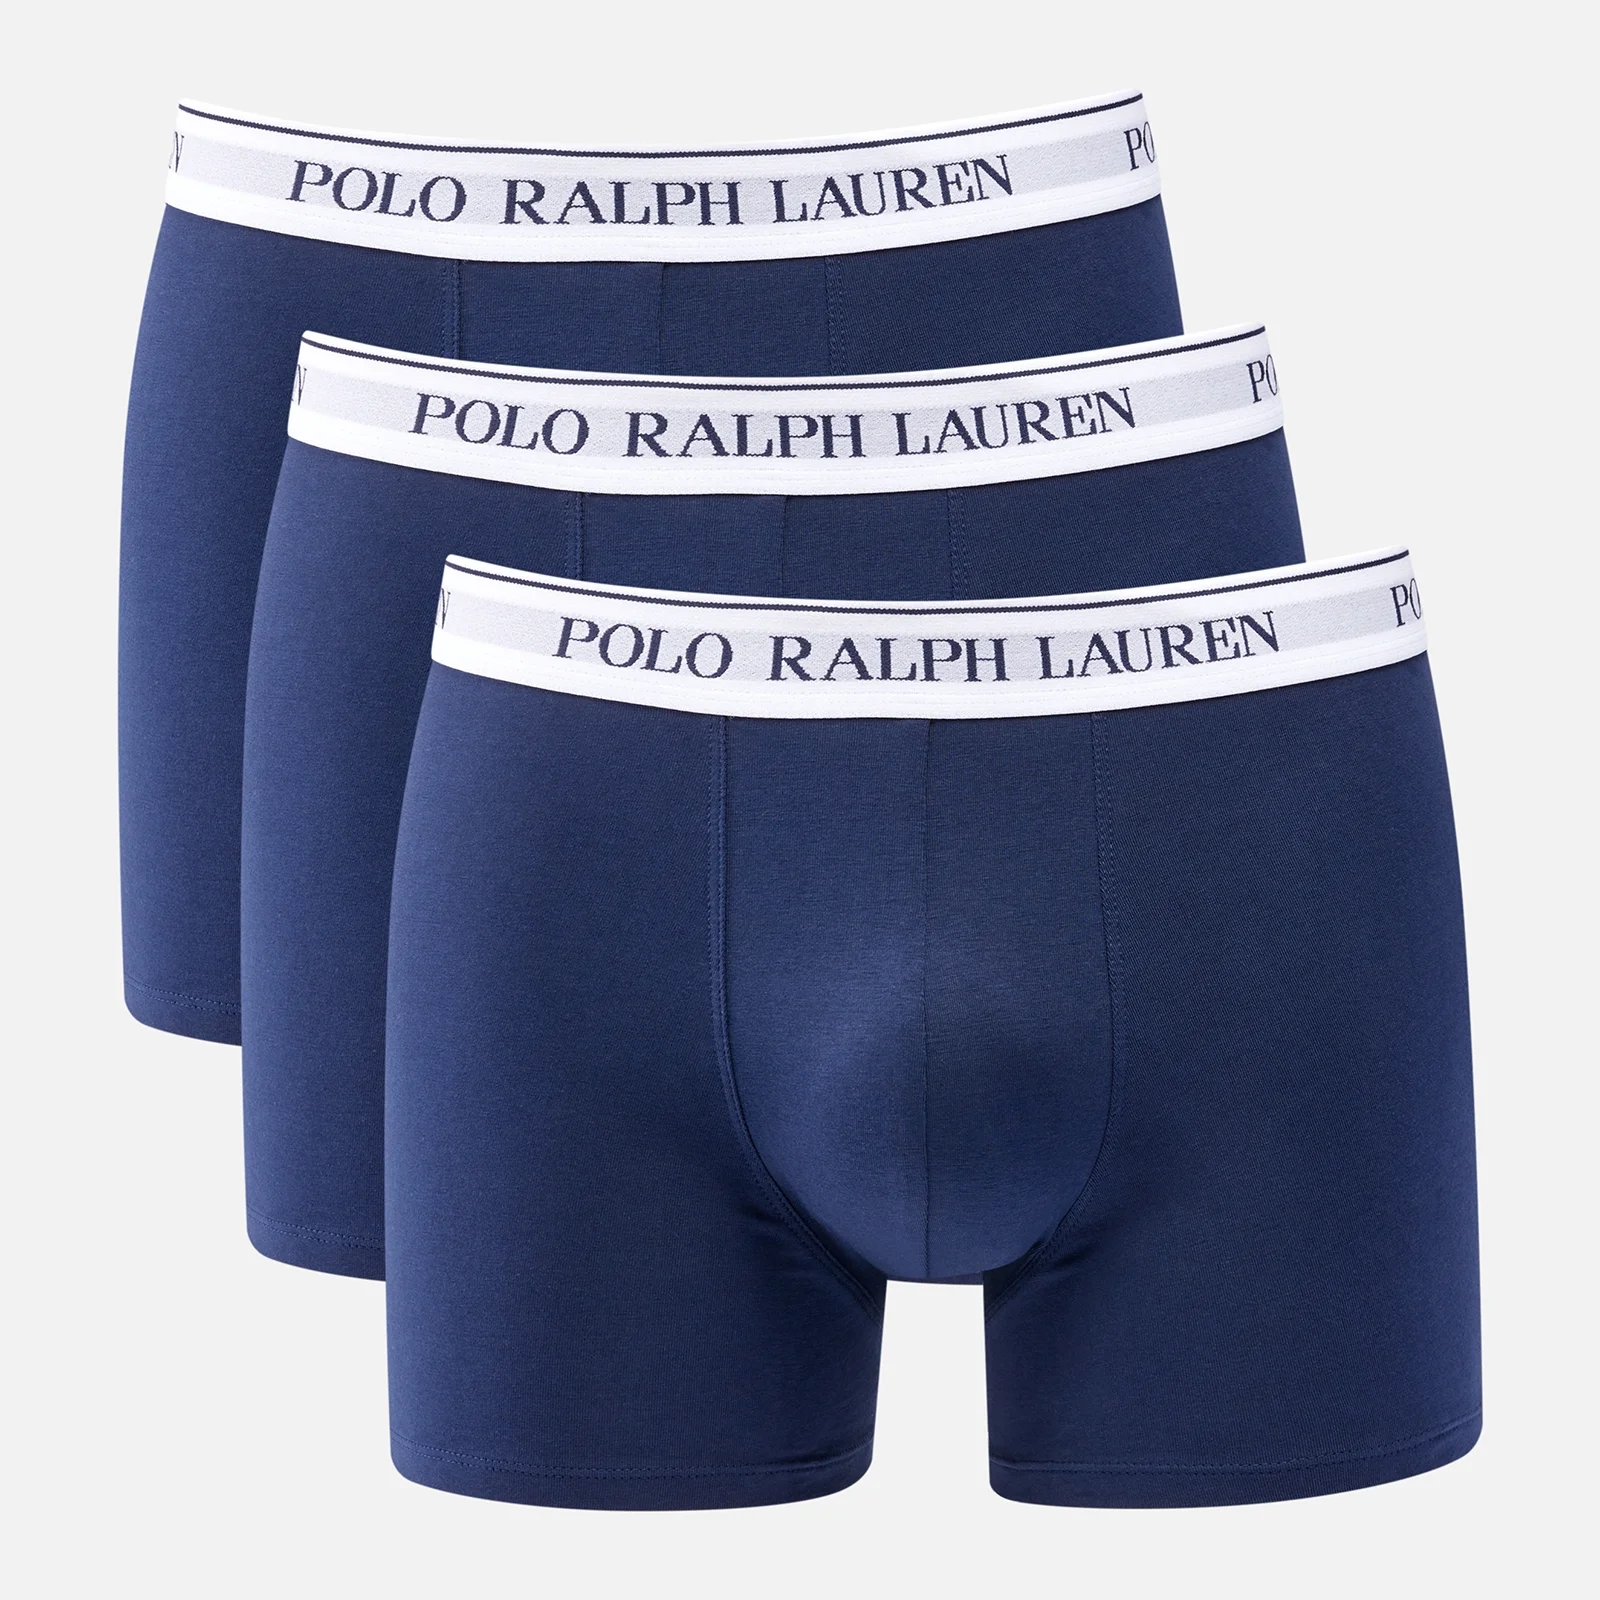 Polo Ralph Lauren Logo Waistband Cotton Boxer Trunks 3-Pack Image 1